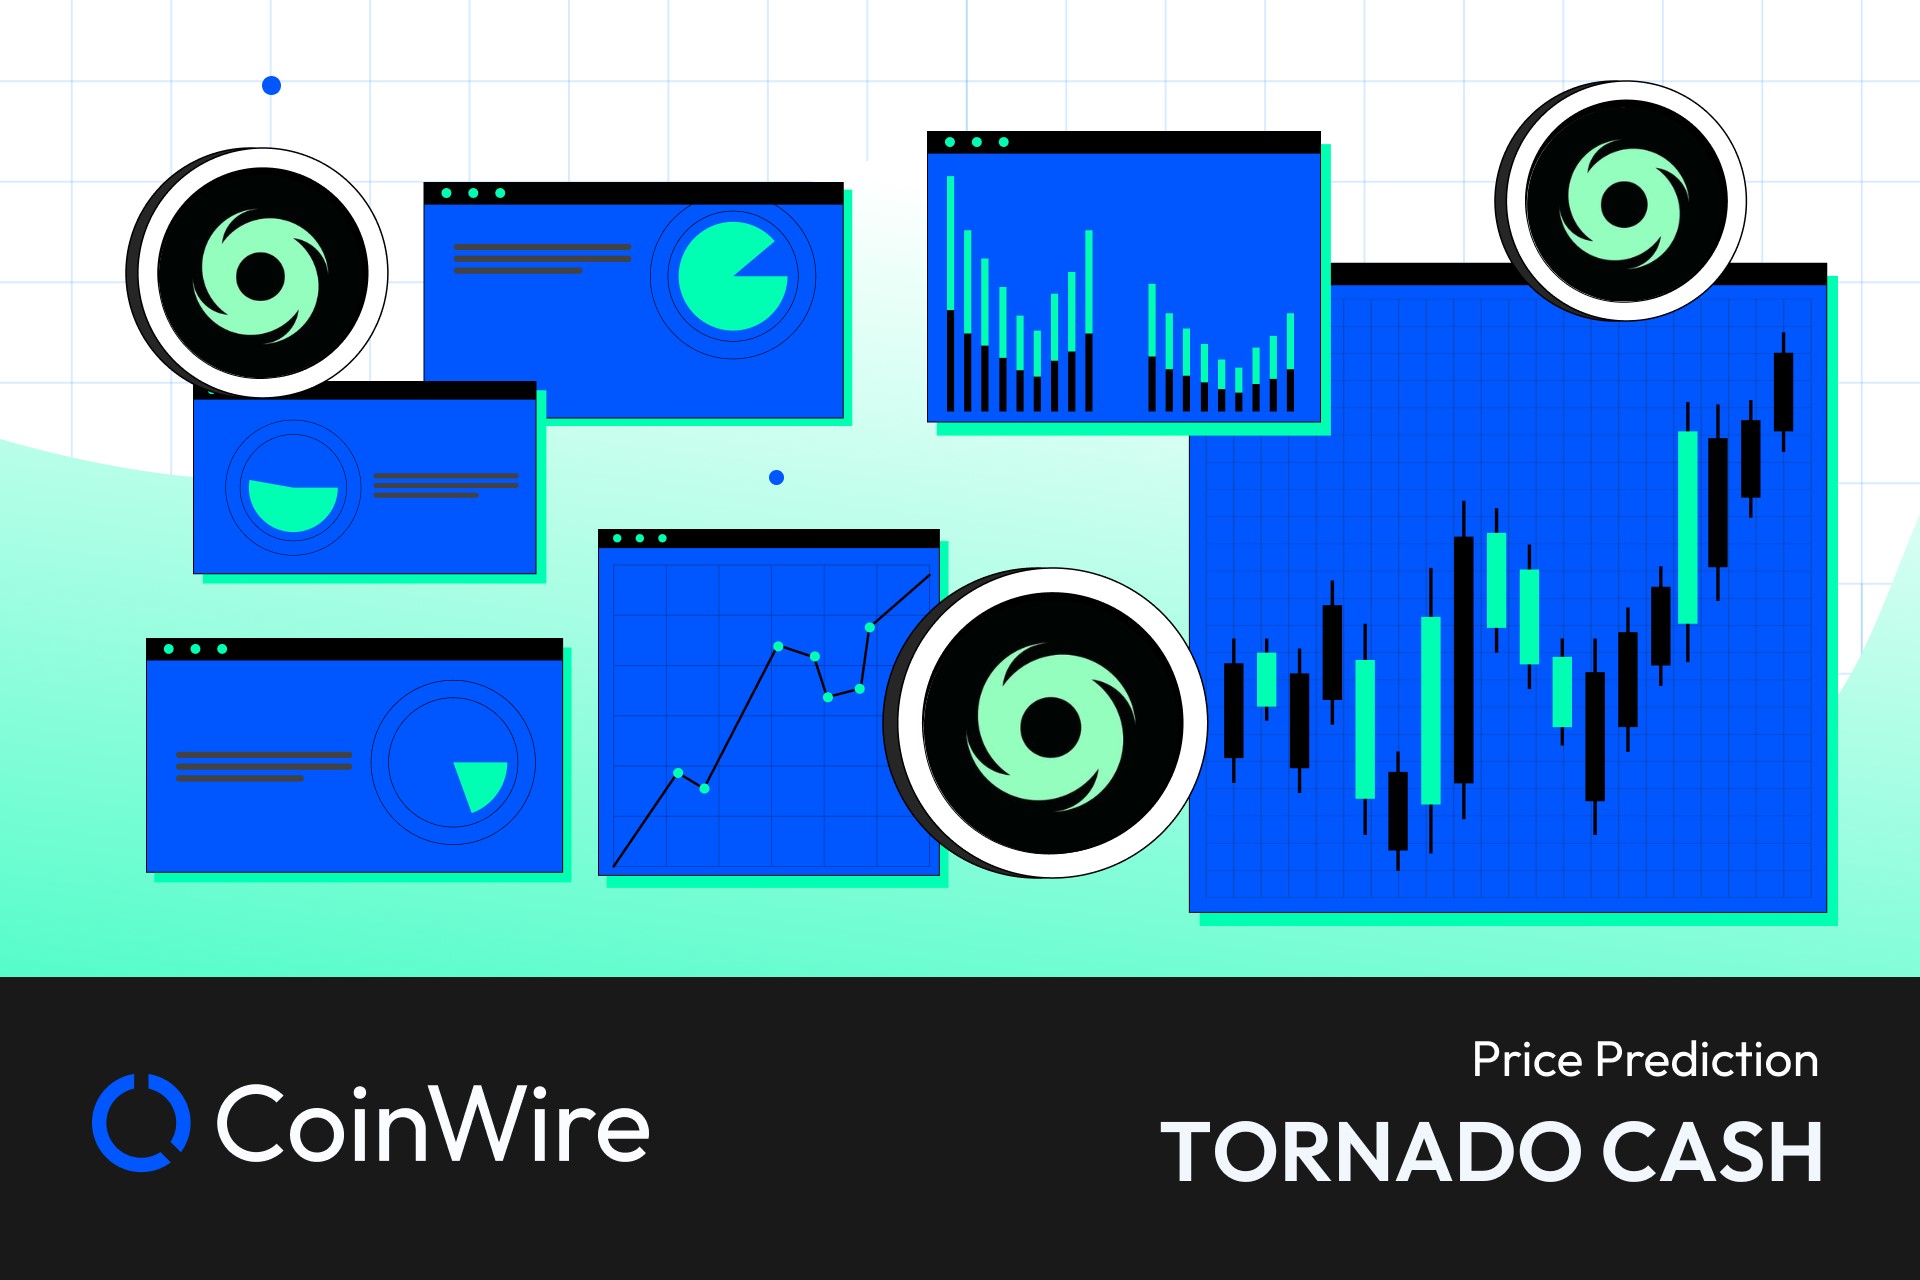 Tornado Cash Price Prediction